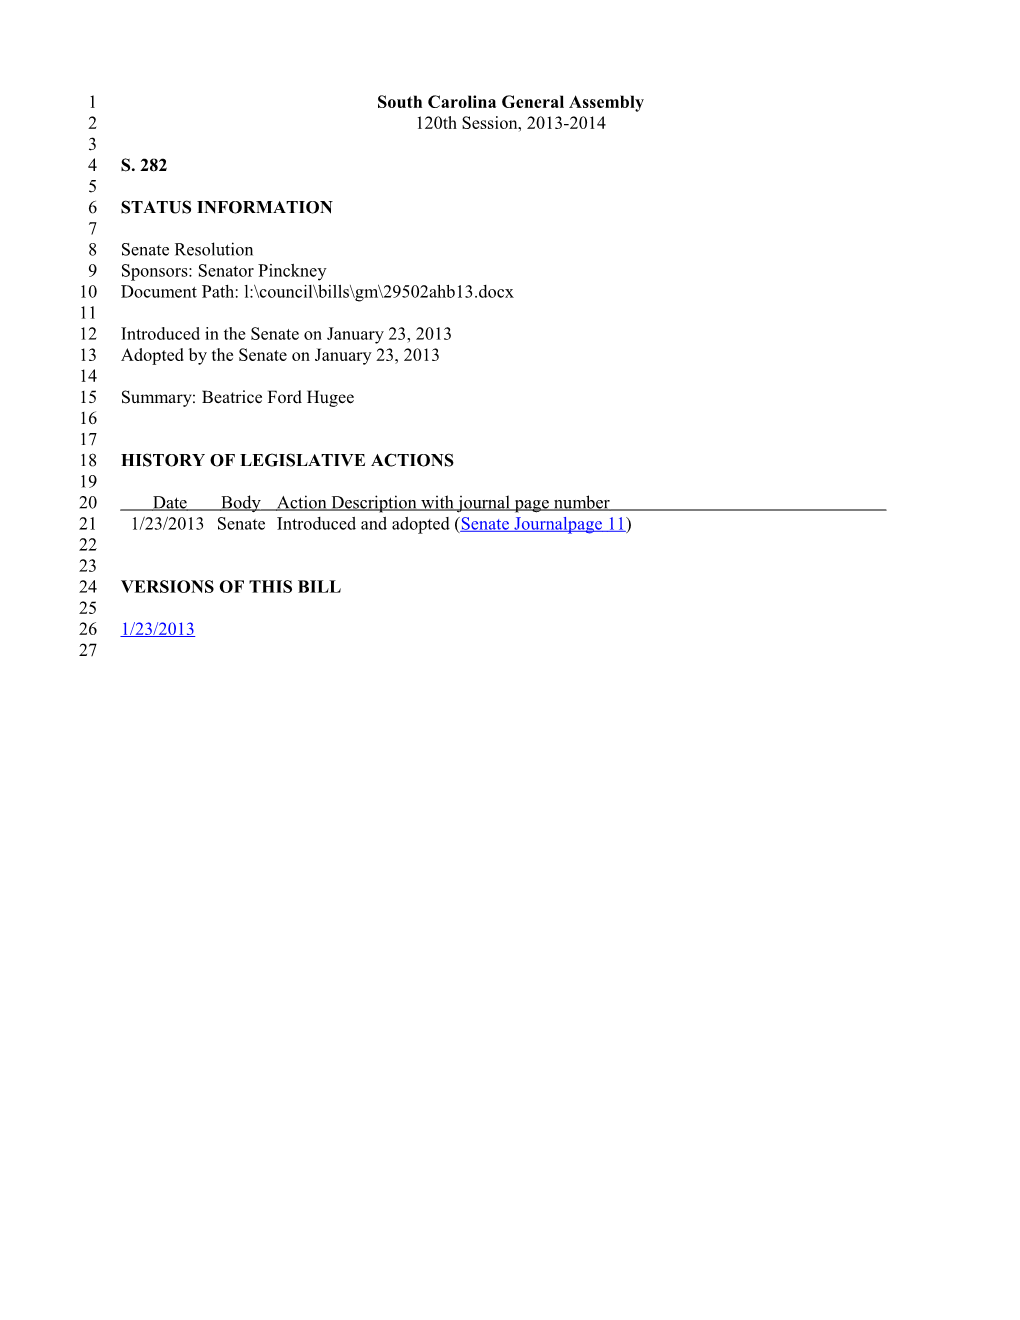 2013-2014 Bill 282: Beatrice Ford Hugee - South Carolina Legislature Online